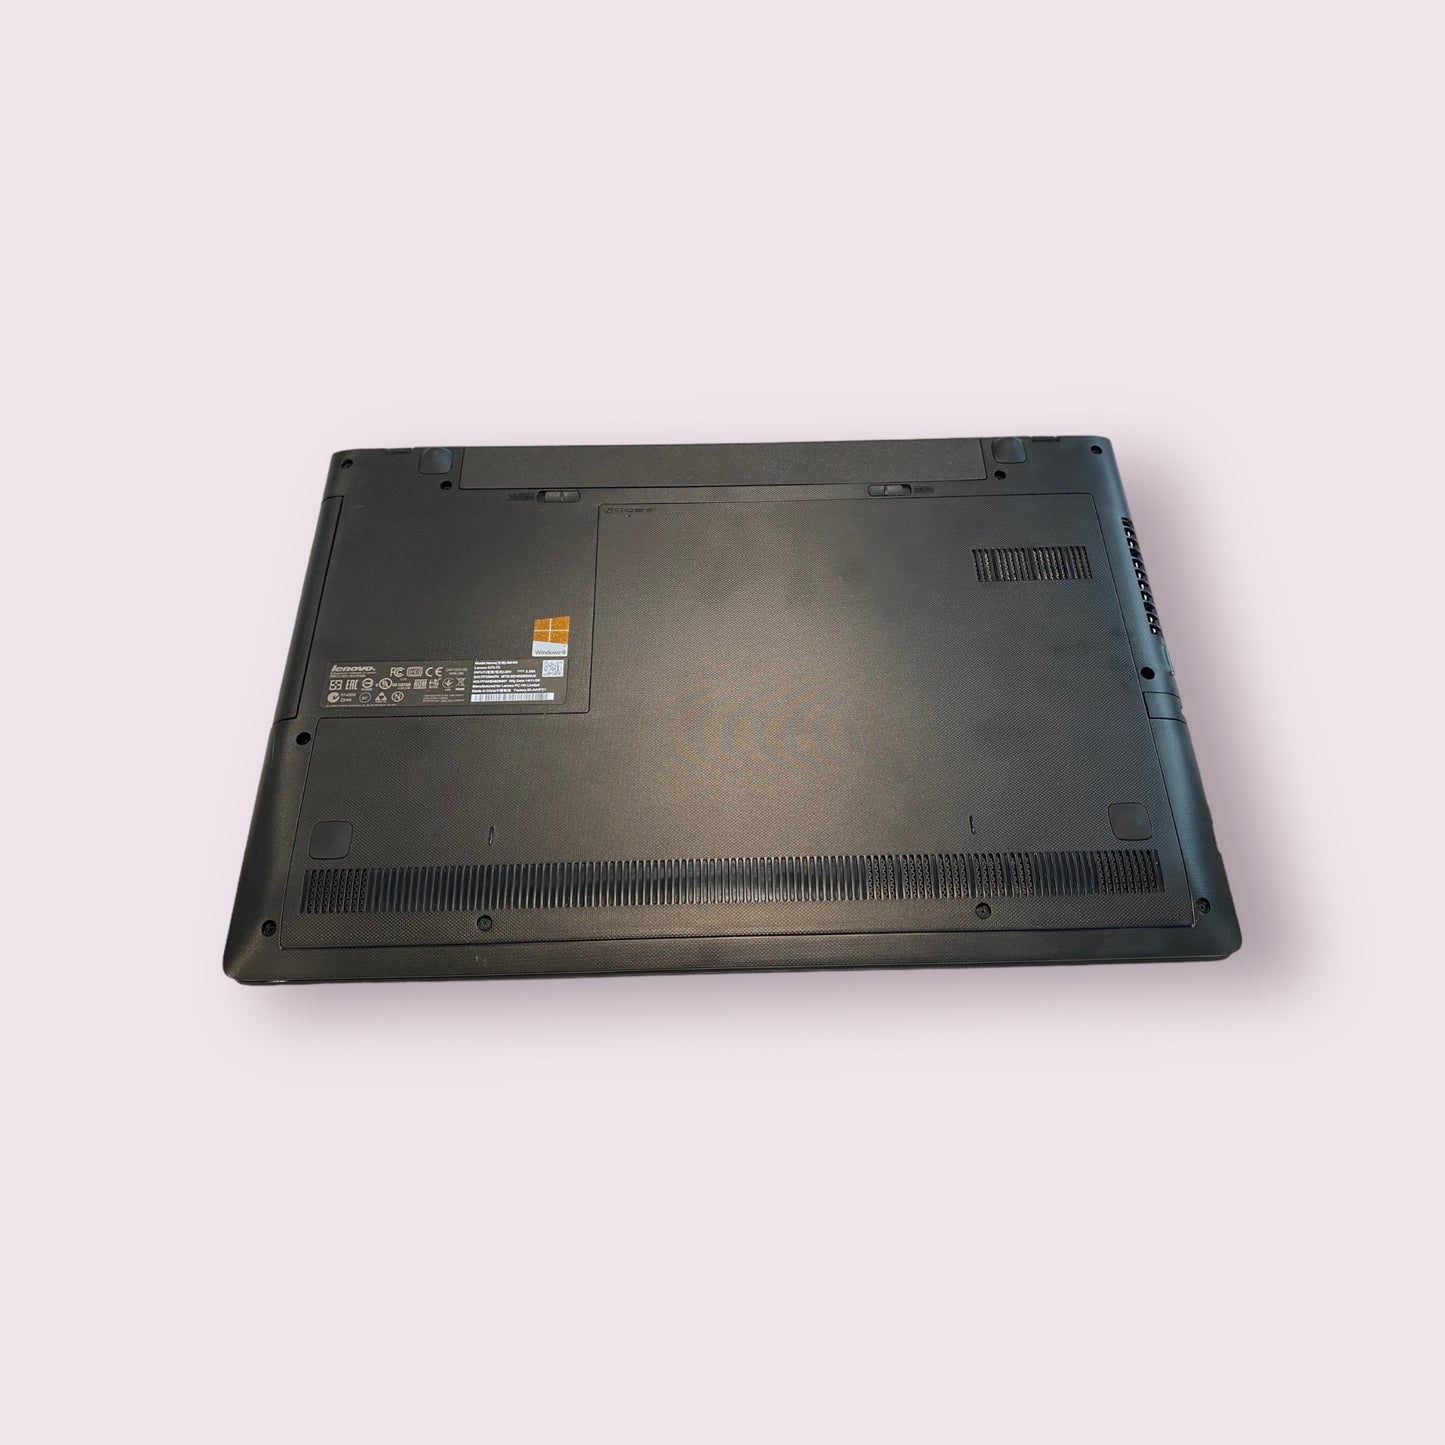 Lenovo G70-70 17.3" Windows 10 Laptop i5 4th, 480GB SSD, 8GB Ram - Grade B